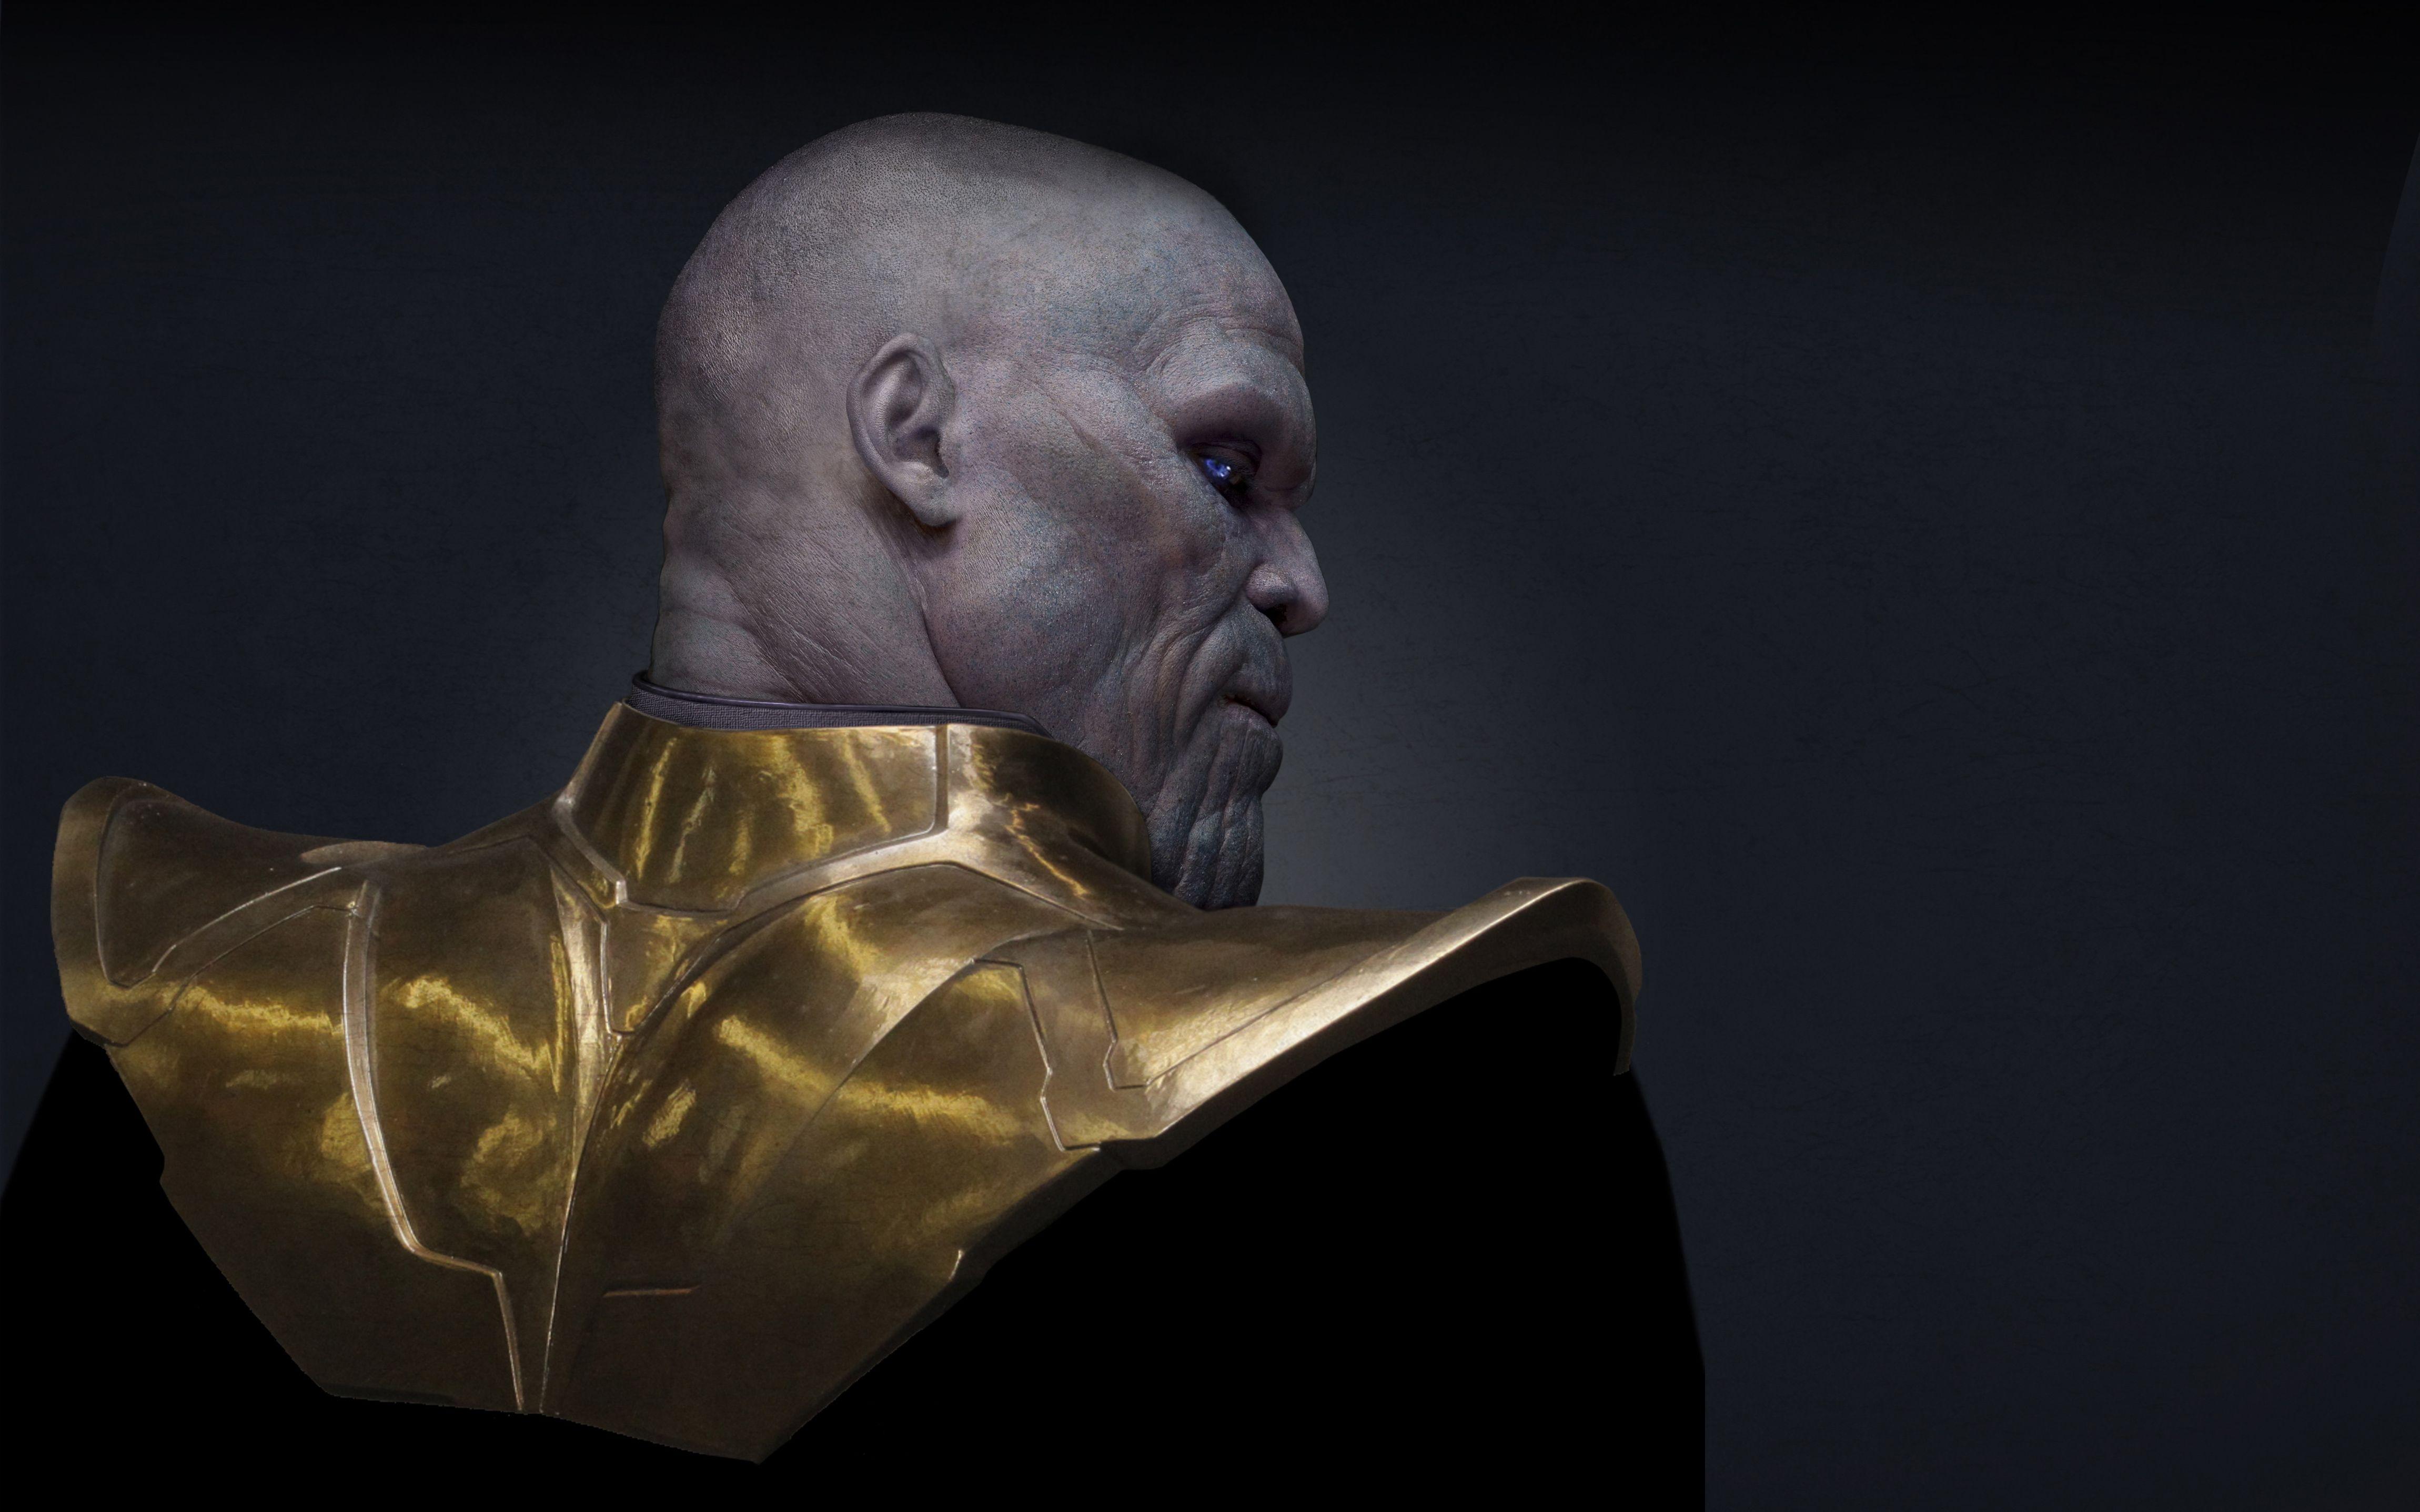 Josh Brolin as Thanos in Avengers Infinity War 4K Wallpaper. HD